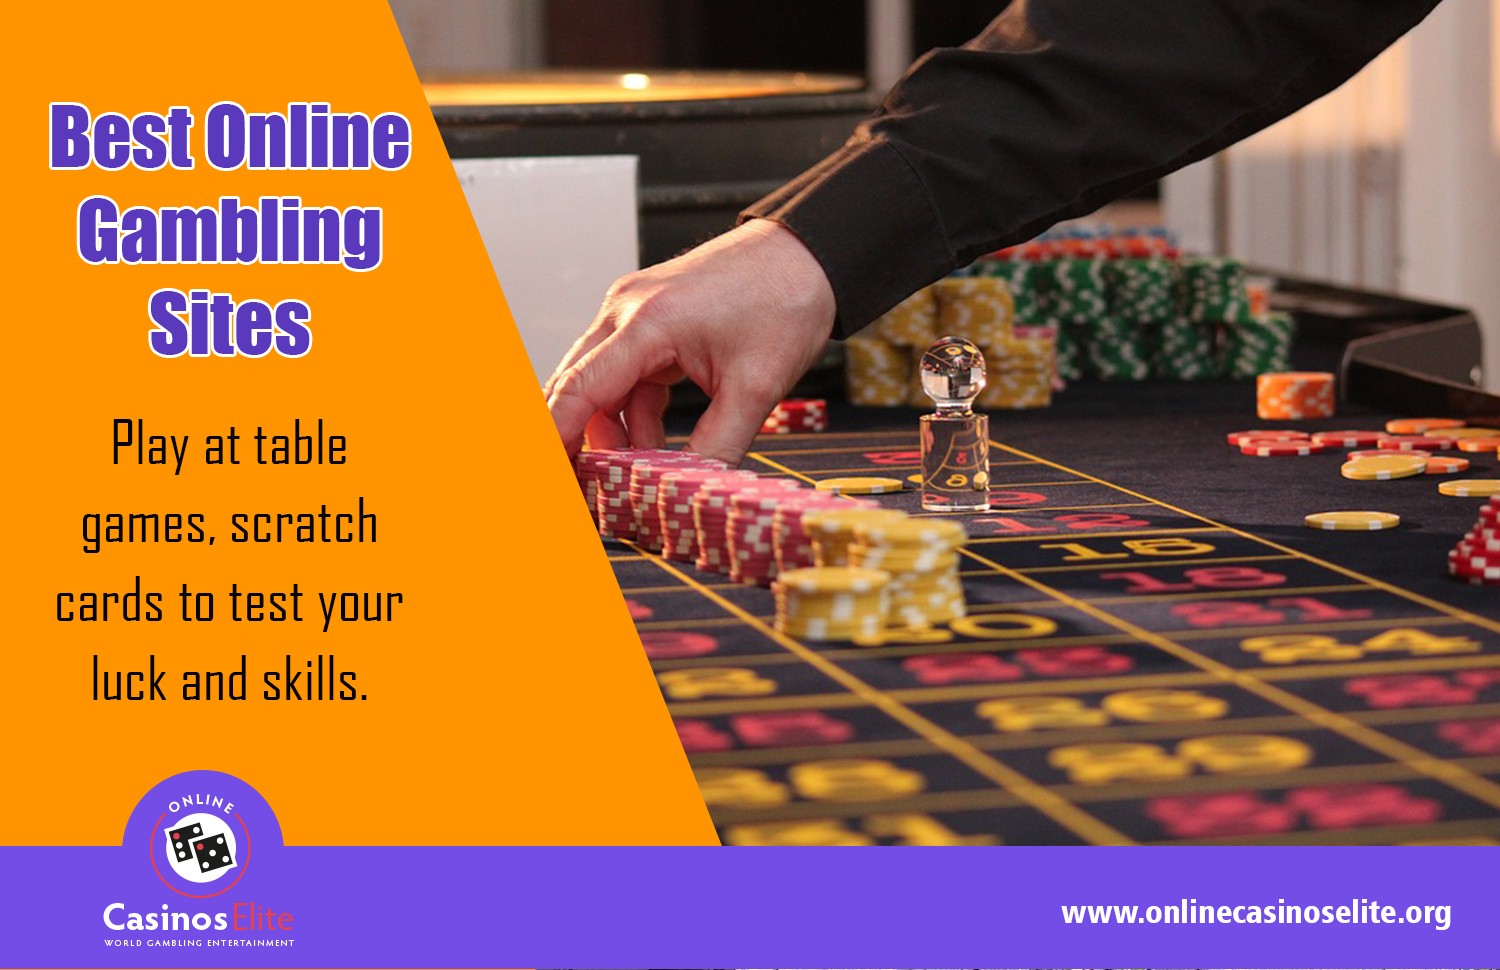 Casino site online